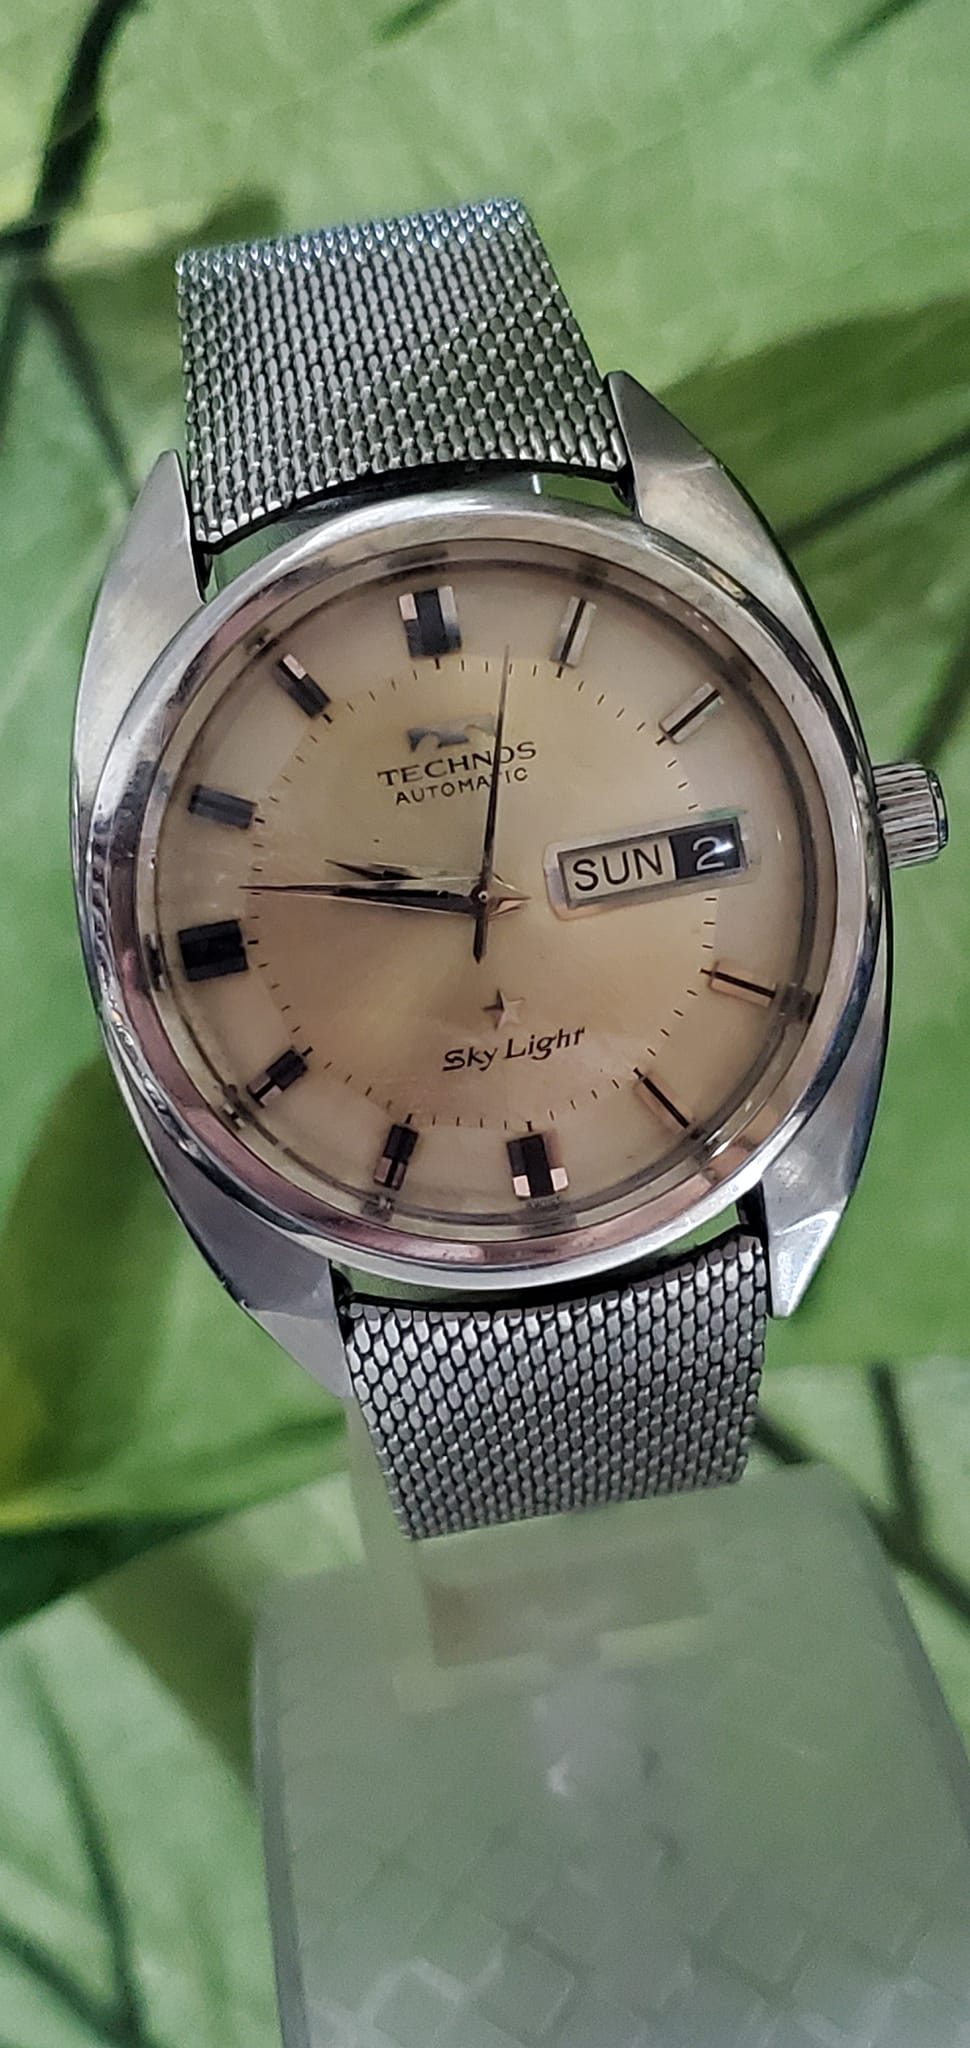 Vintage Technos Sky Light Switzerland ðŸ‡¨ðŸ‡­ made Automatic 25 jewels watch for Men's